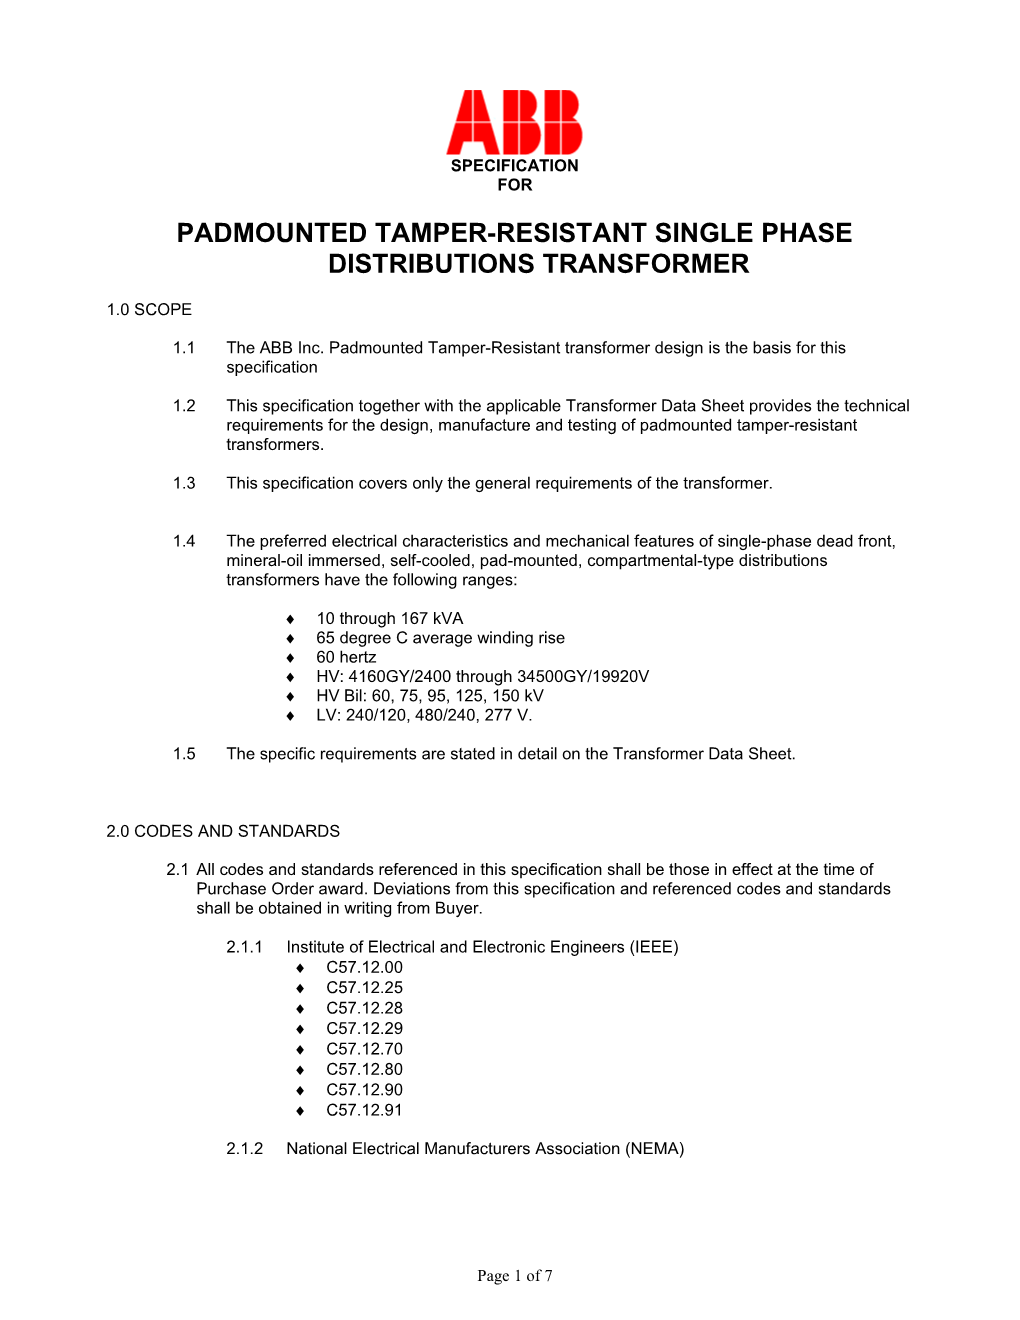 Padmounted Tamper-Resistant Single Phase Distributions Transformer